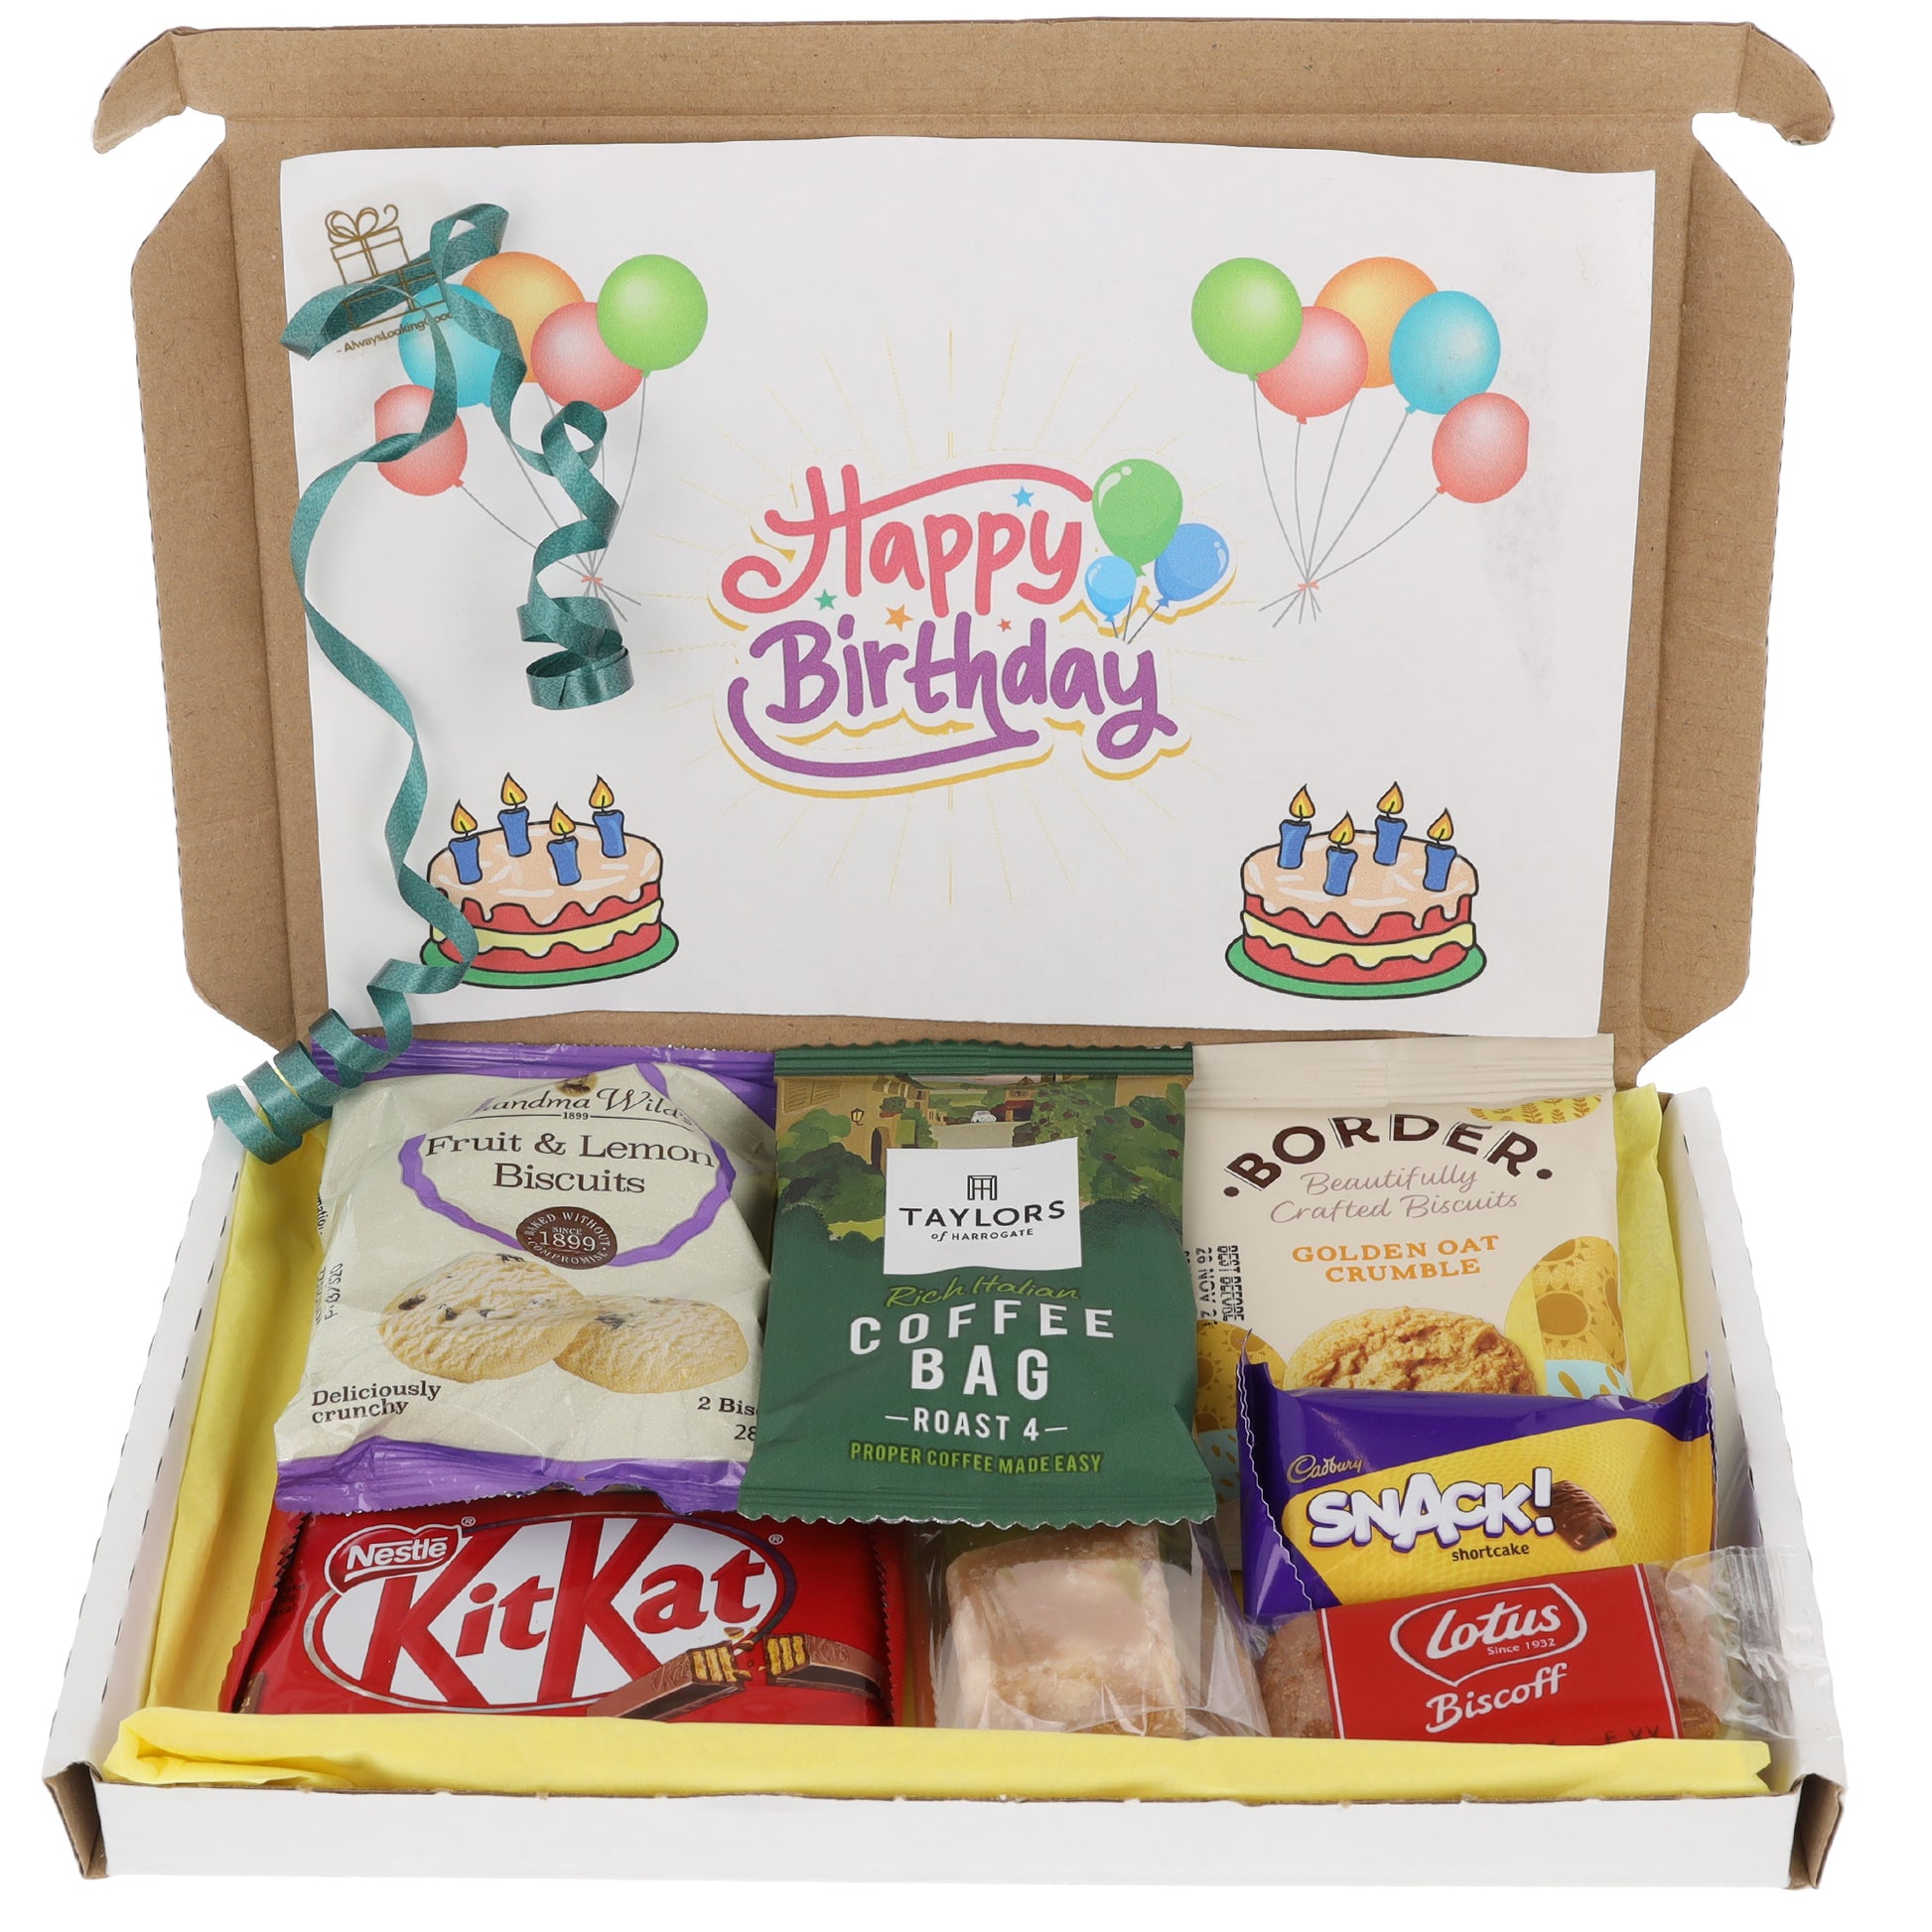 Afternoon Coffee & Biscuit Hamper Letterbox Gift Box  - Always Looking Good -   